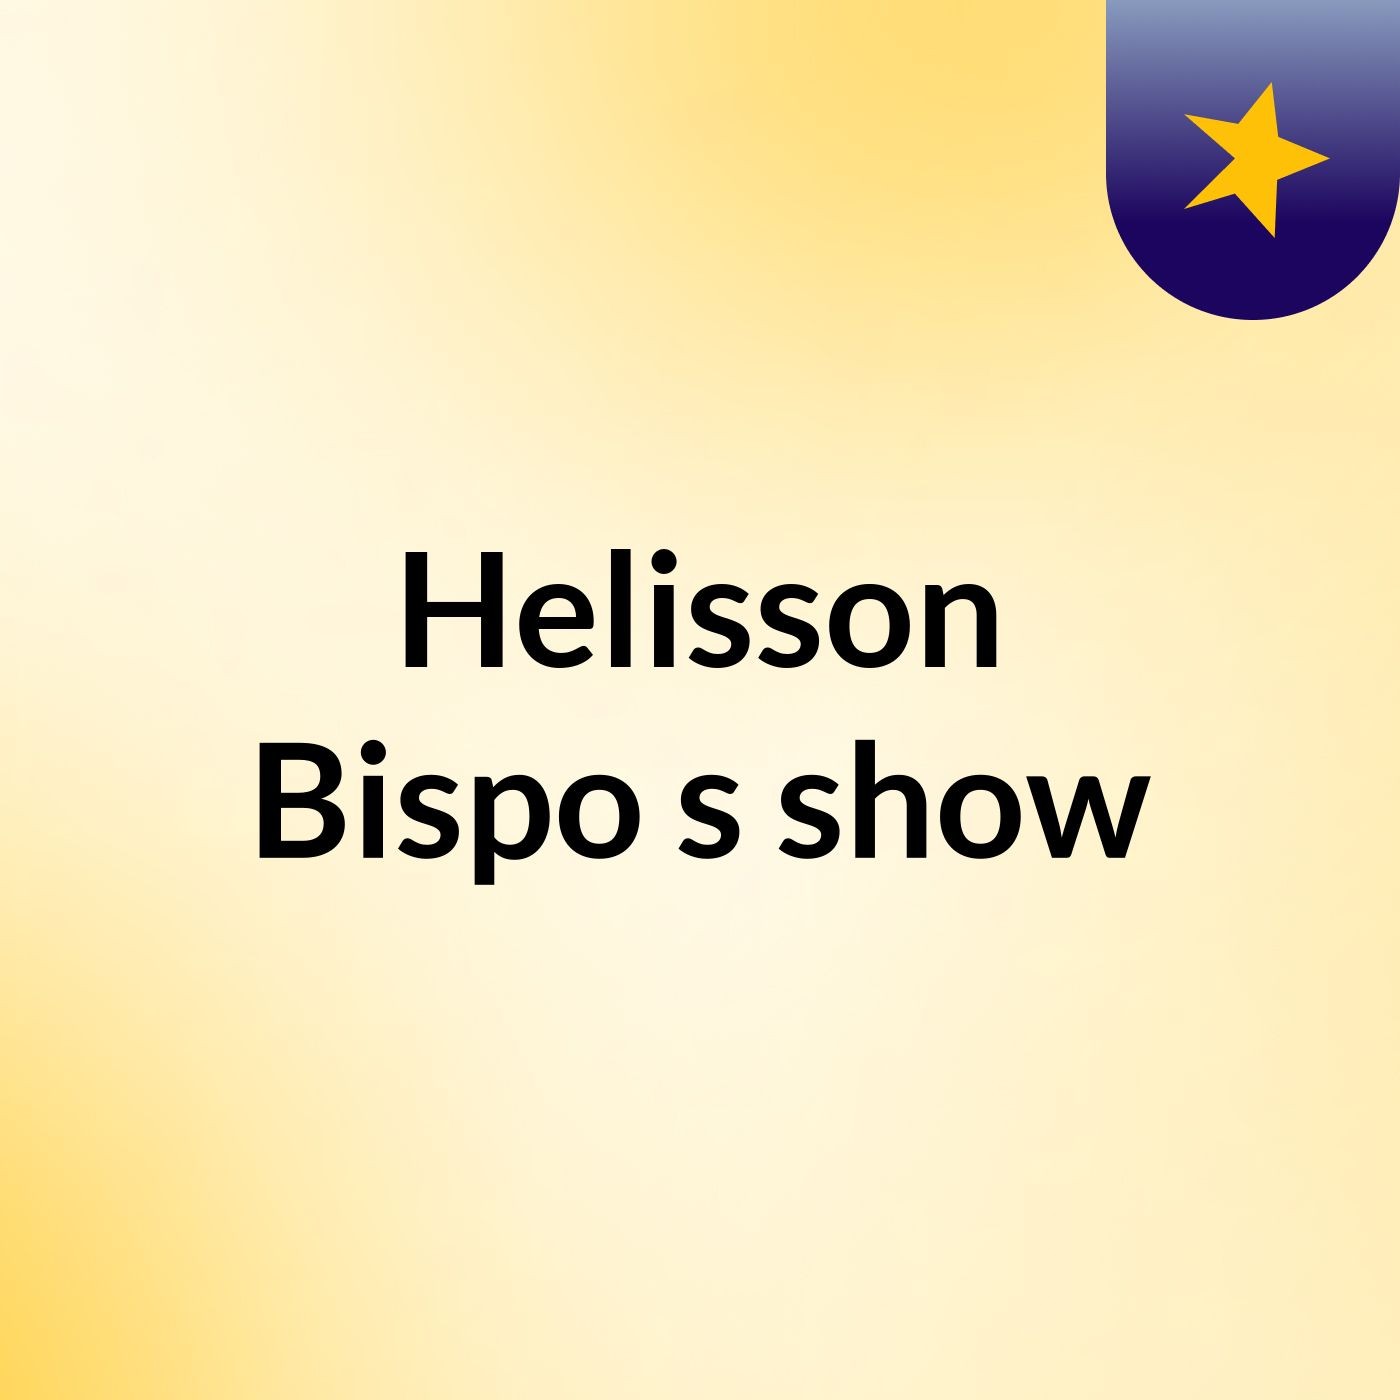 Helisson Bispo's show